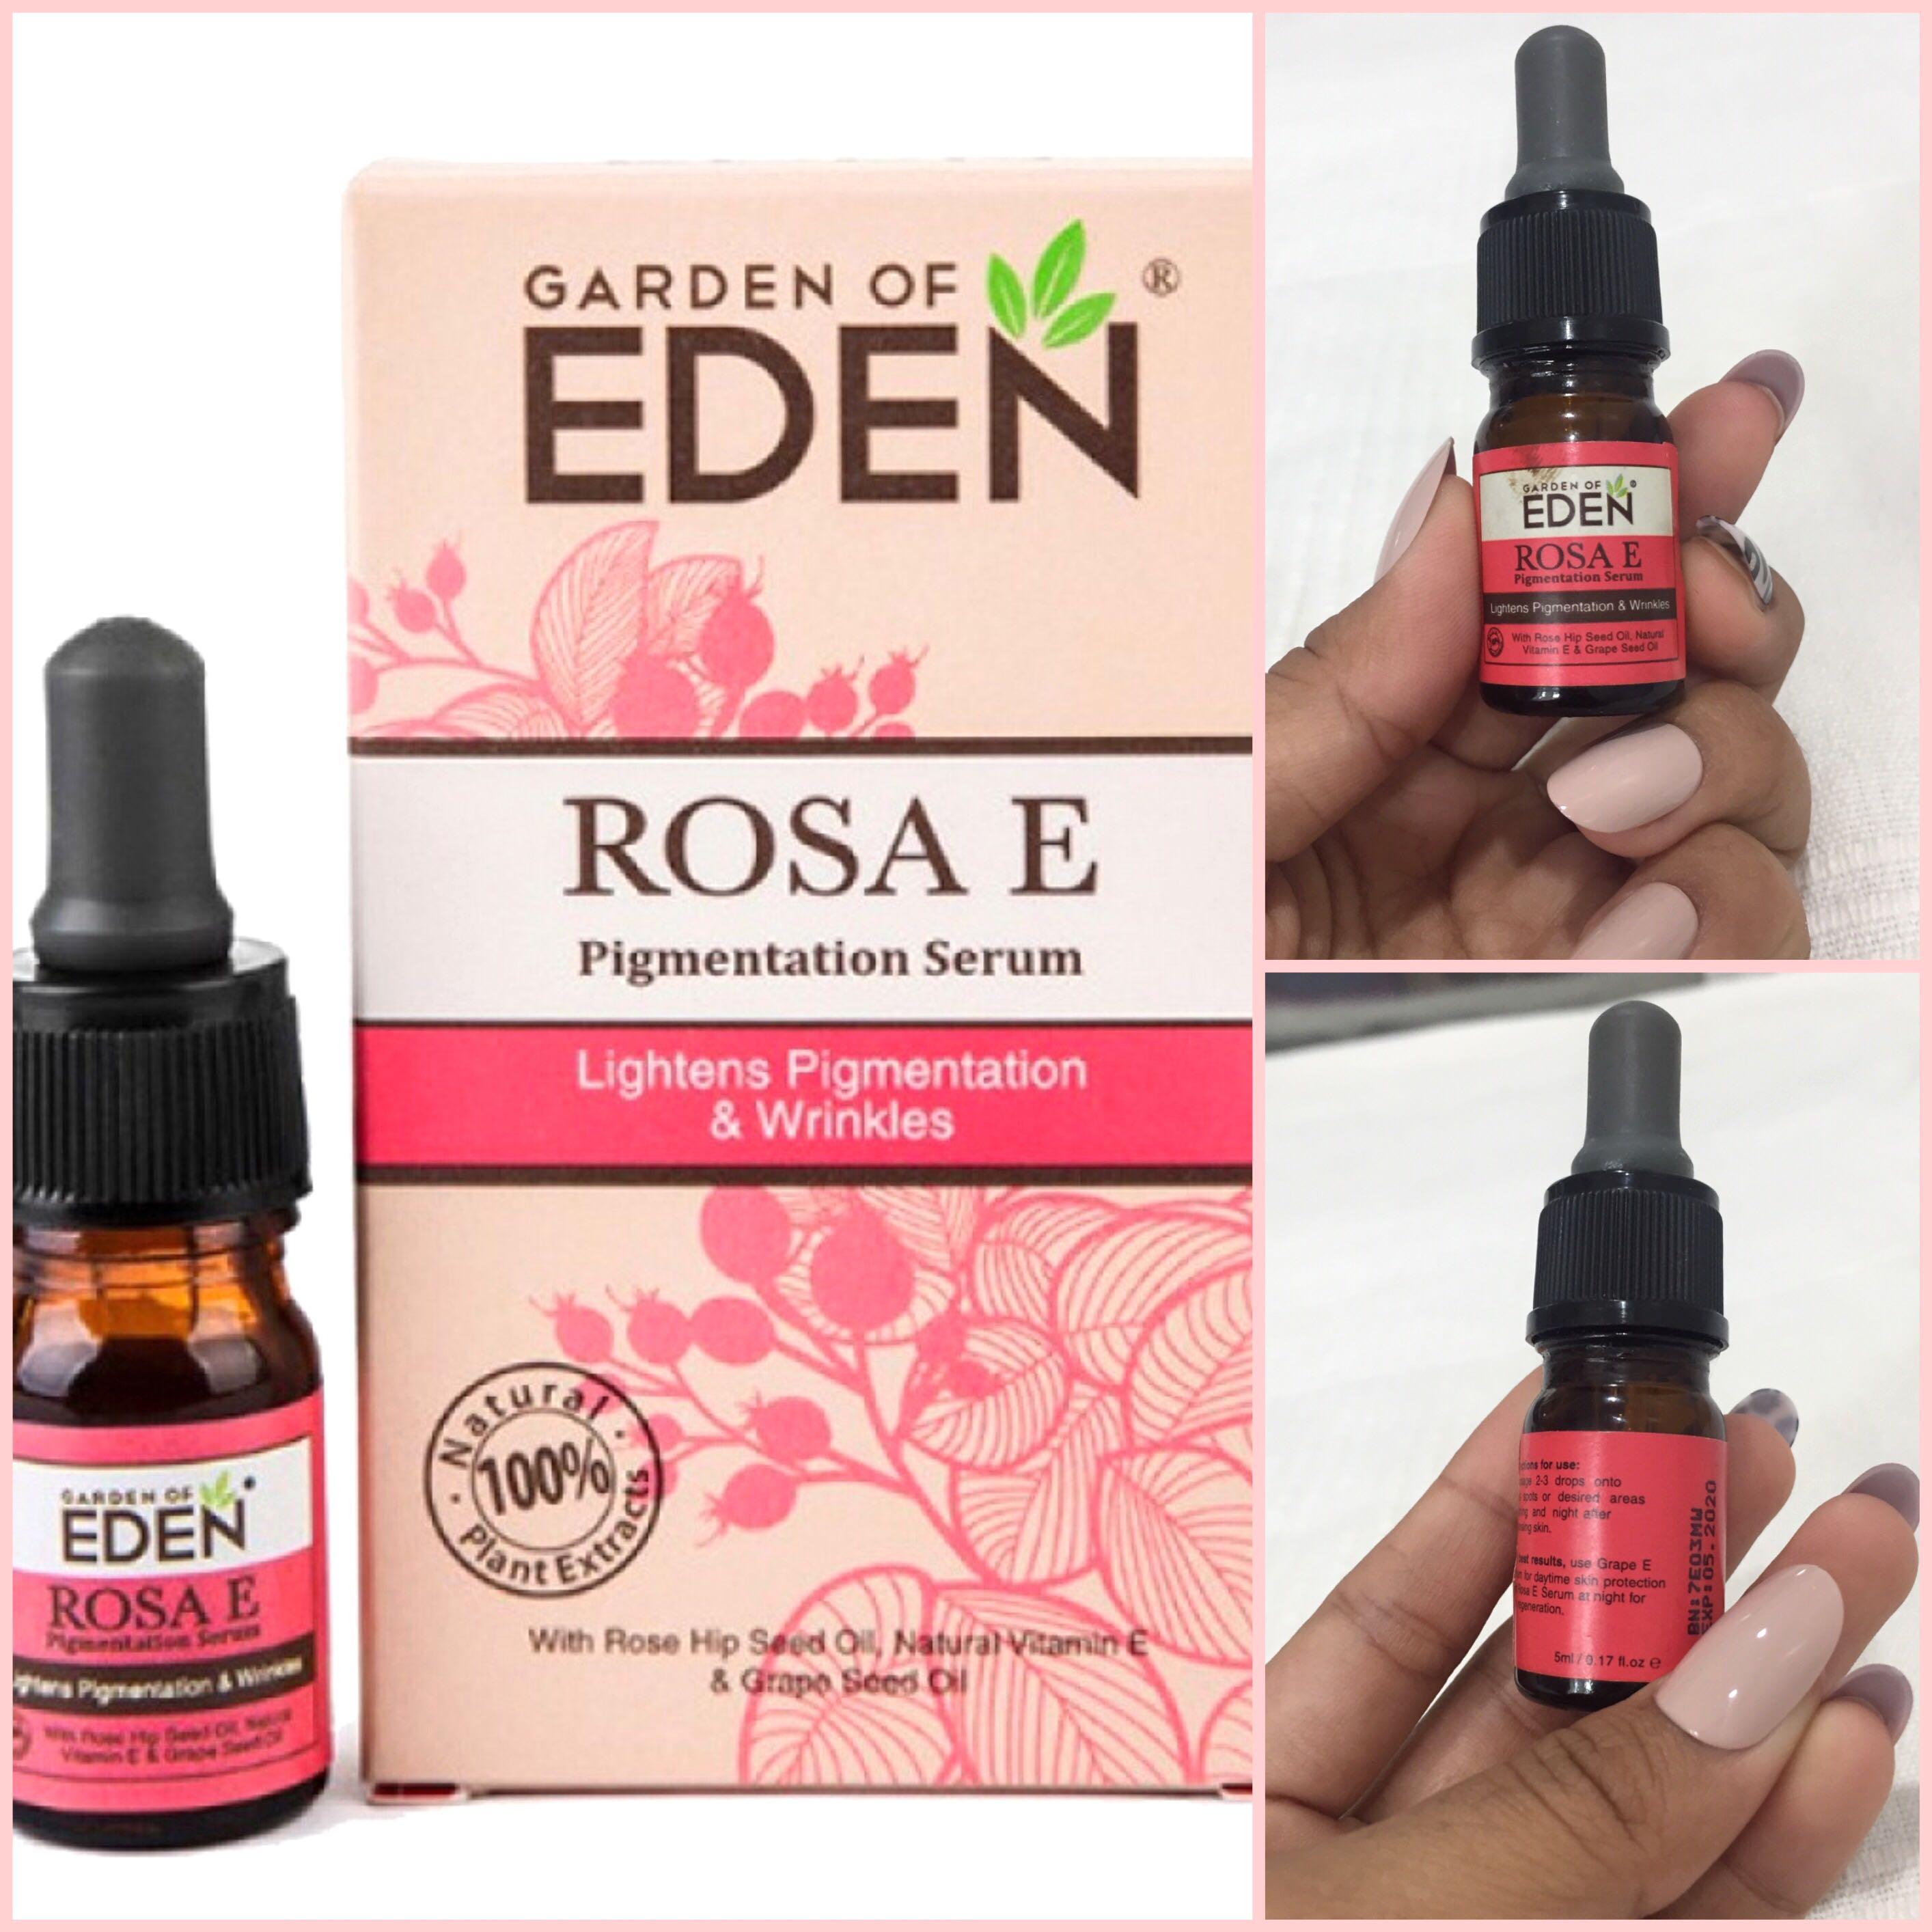 Eden Rosa E Pigmentation Serum